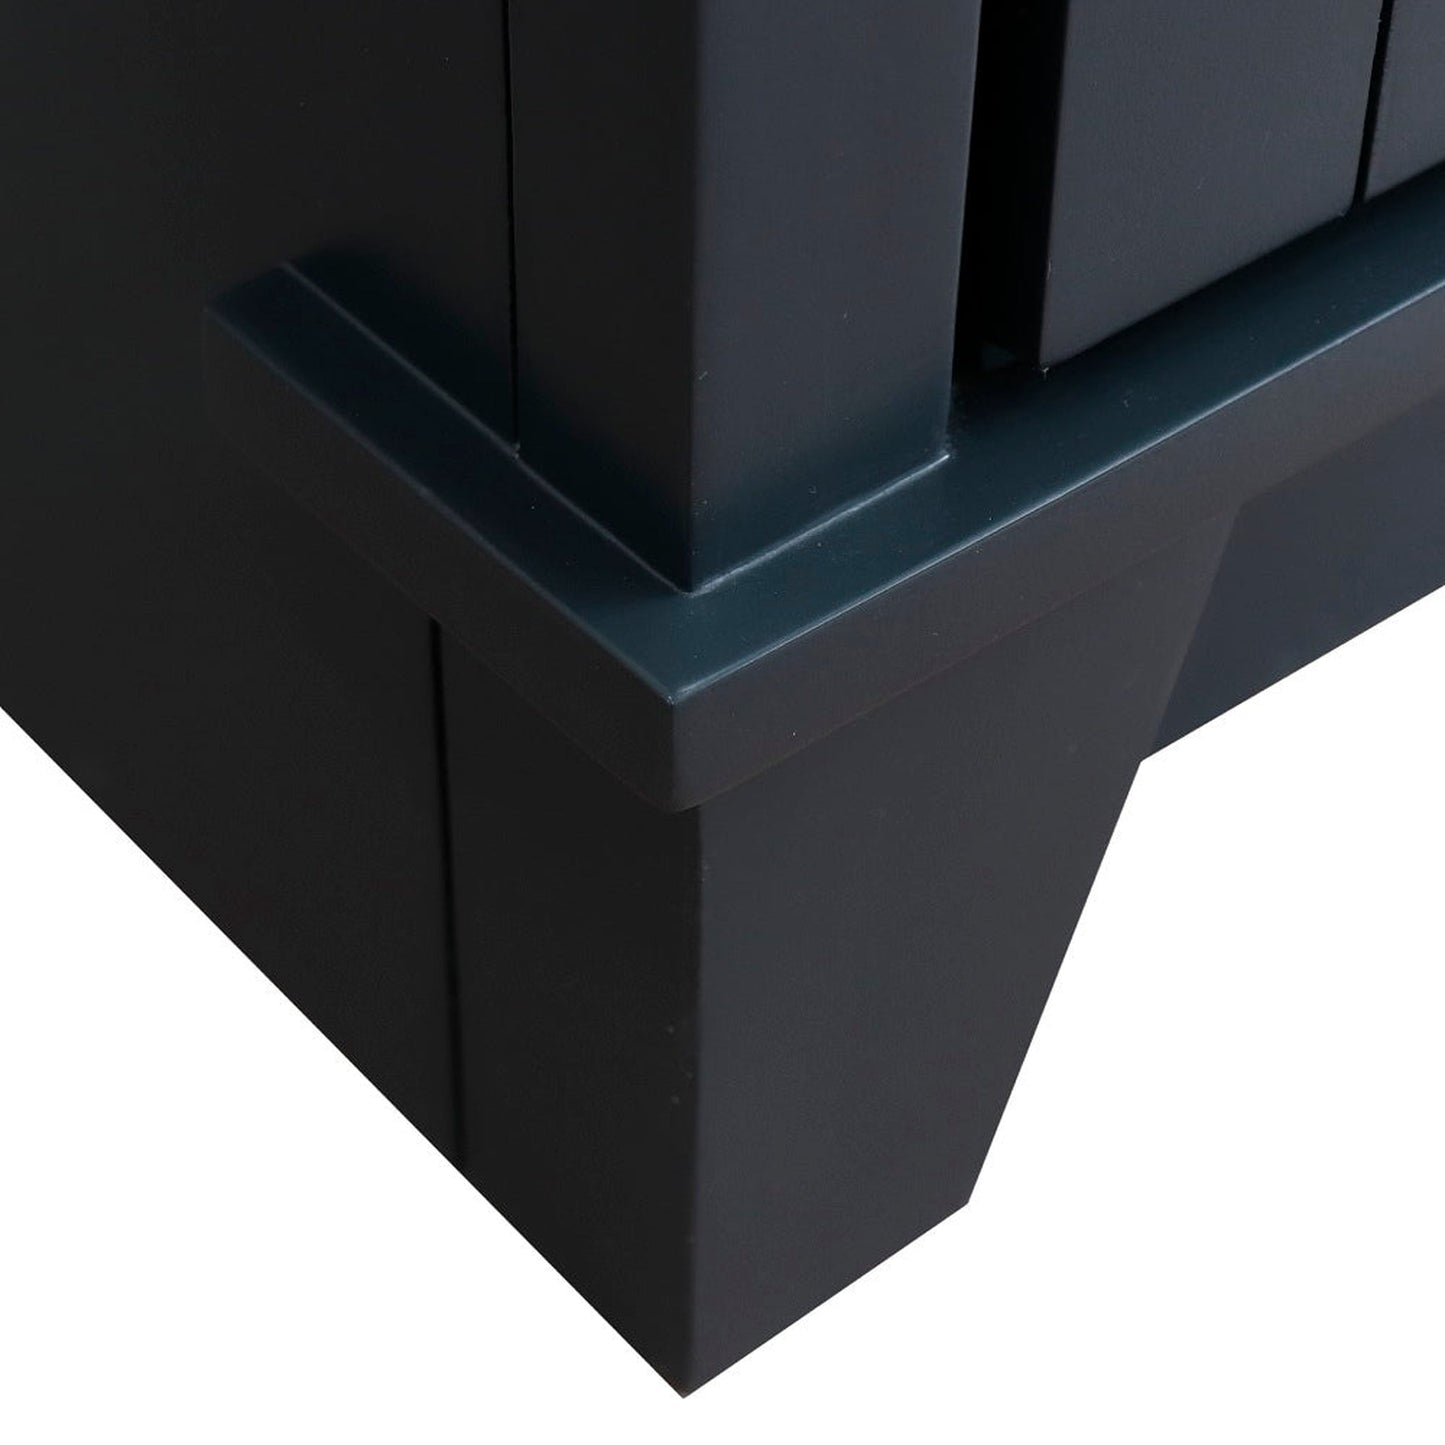 Bellaterra Home Terni 61" 2-Door 6-Drawer Dark Gray Freestanding Vanity Set With Ceramic Undermount Oval Sink And Black Galaxy Granite Top